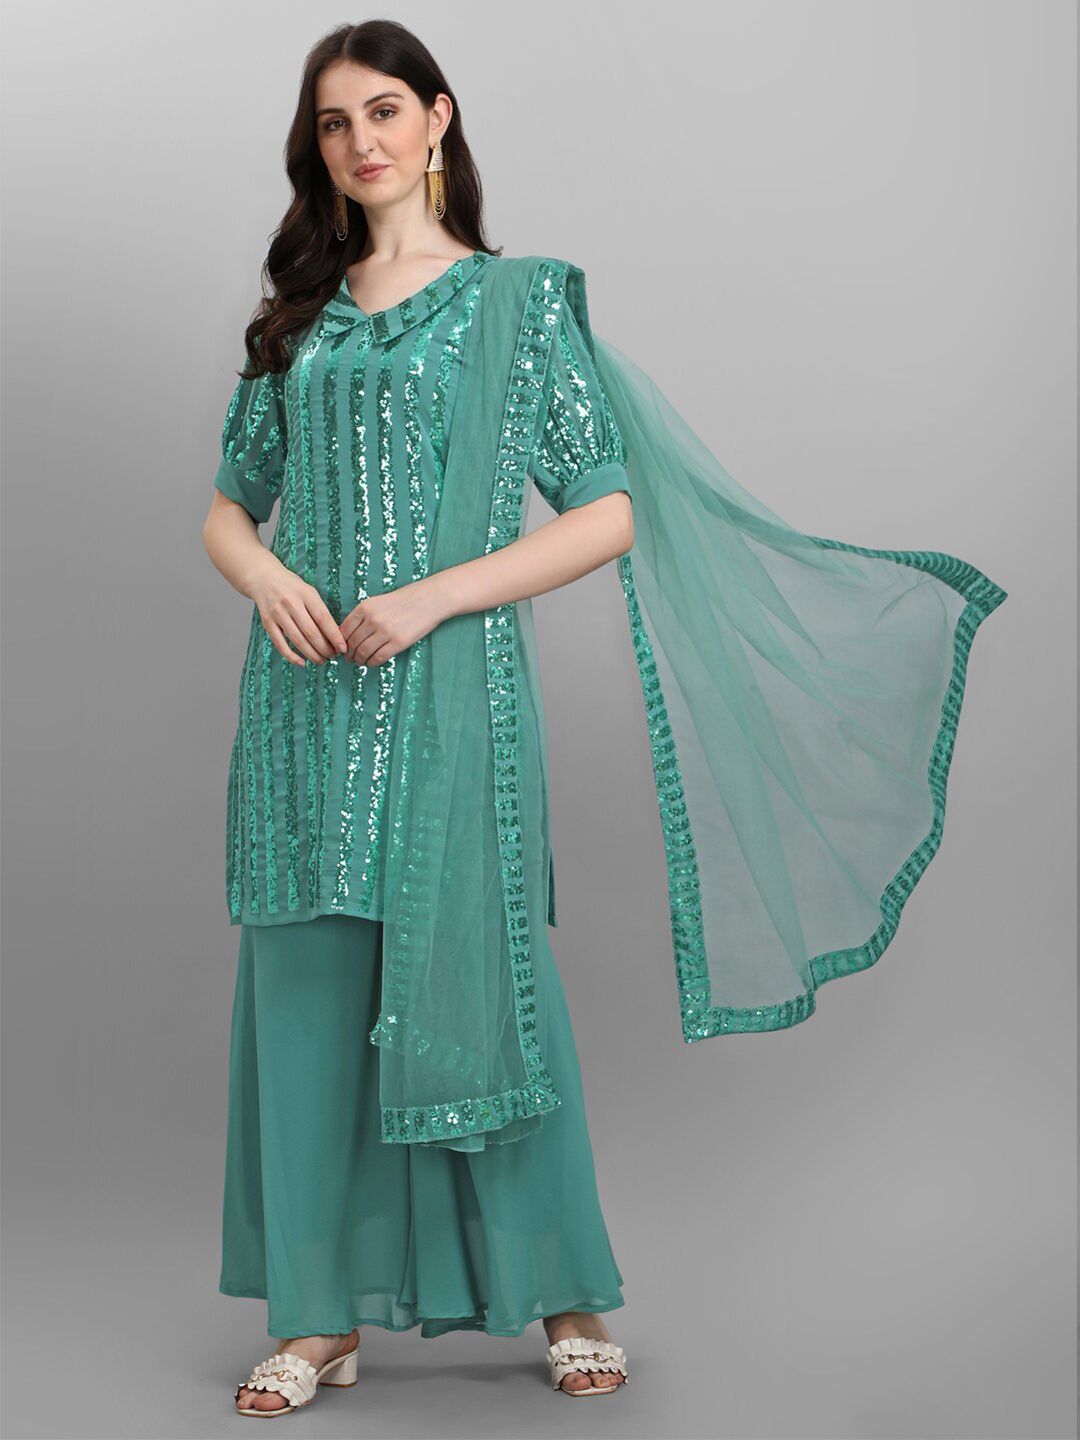 JATRIQQ Turquoise Blue Embellished Silk Georgette Semi-Stitched Dress Material Price in India